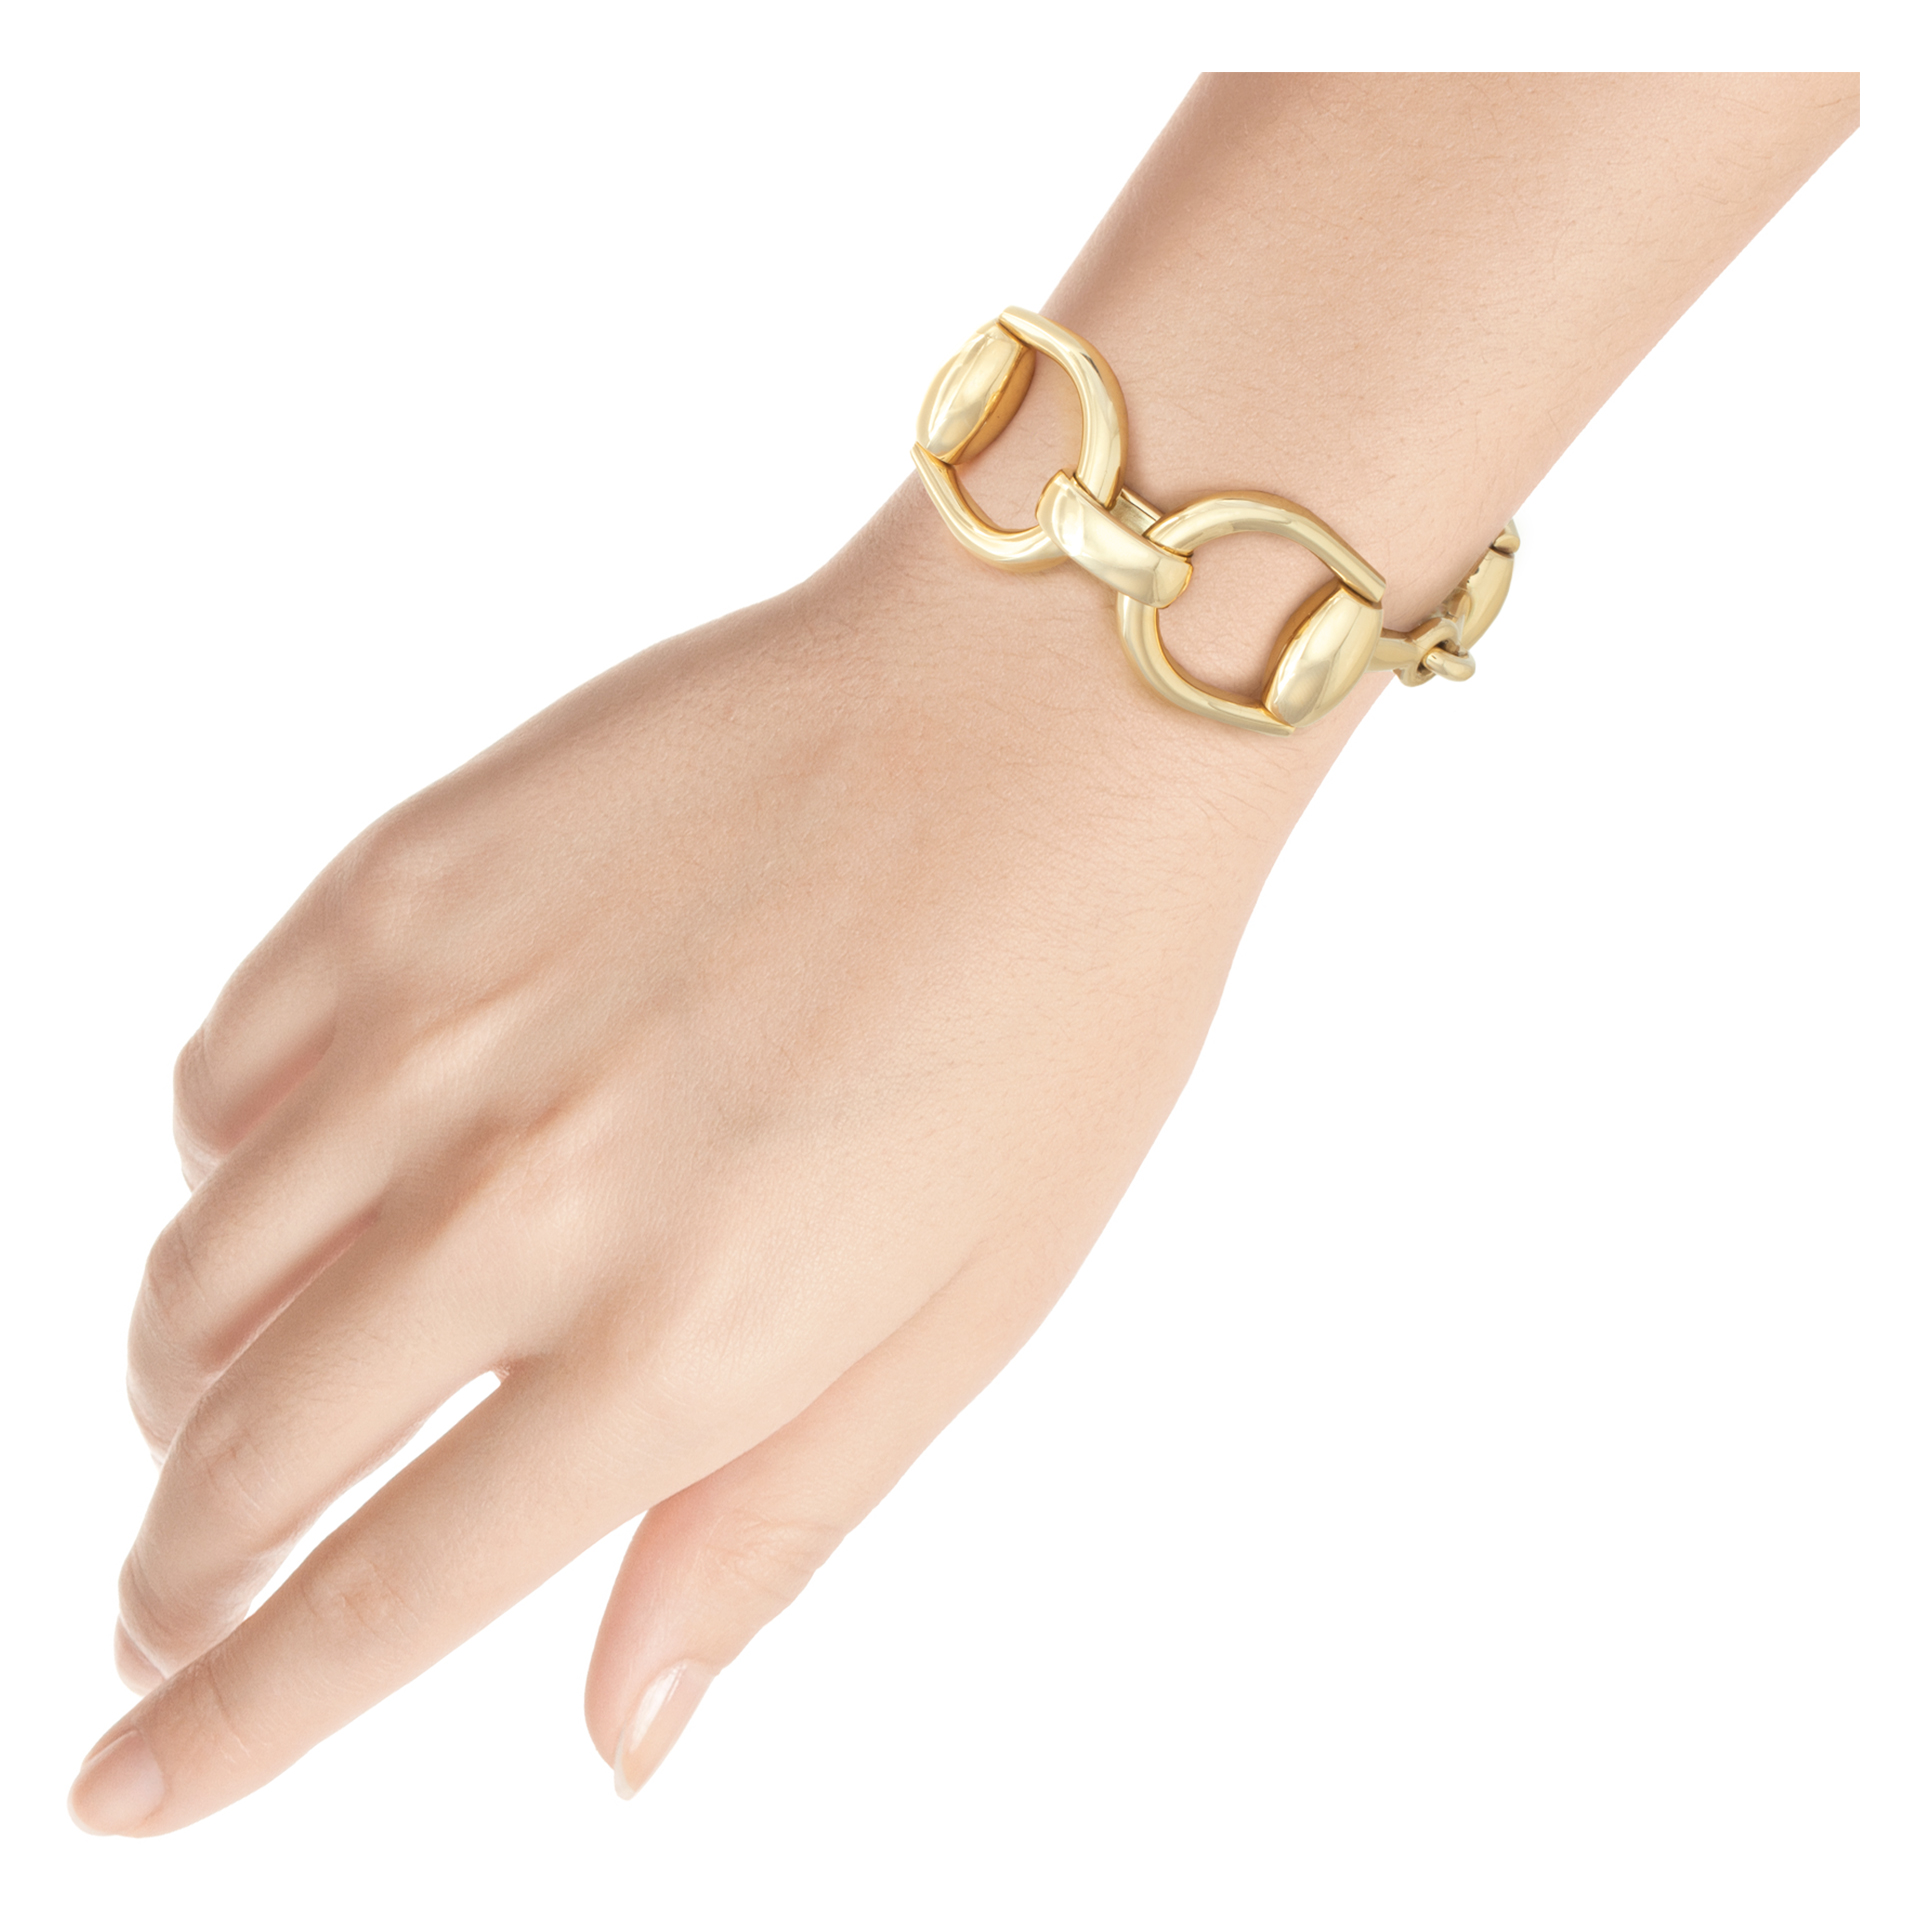 Gucci Horsebit bracelet in 18k